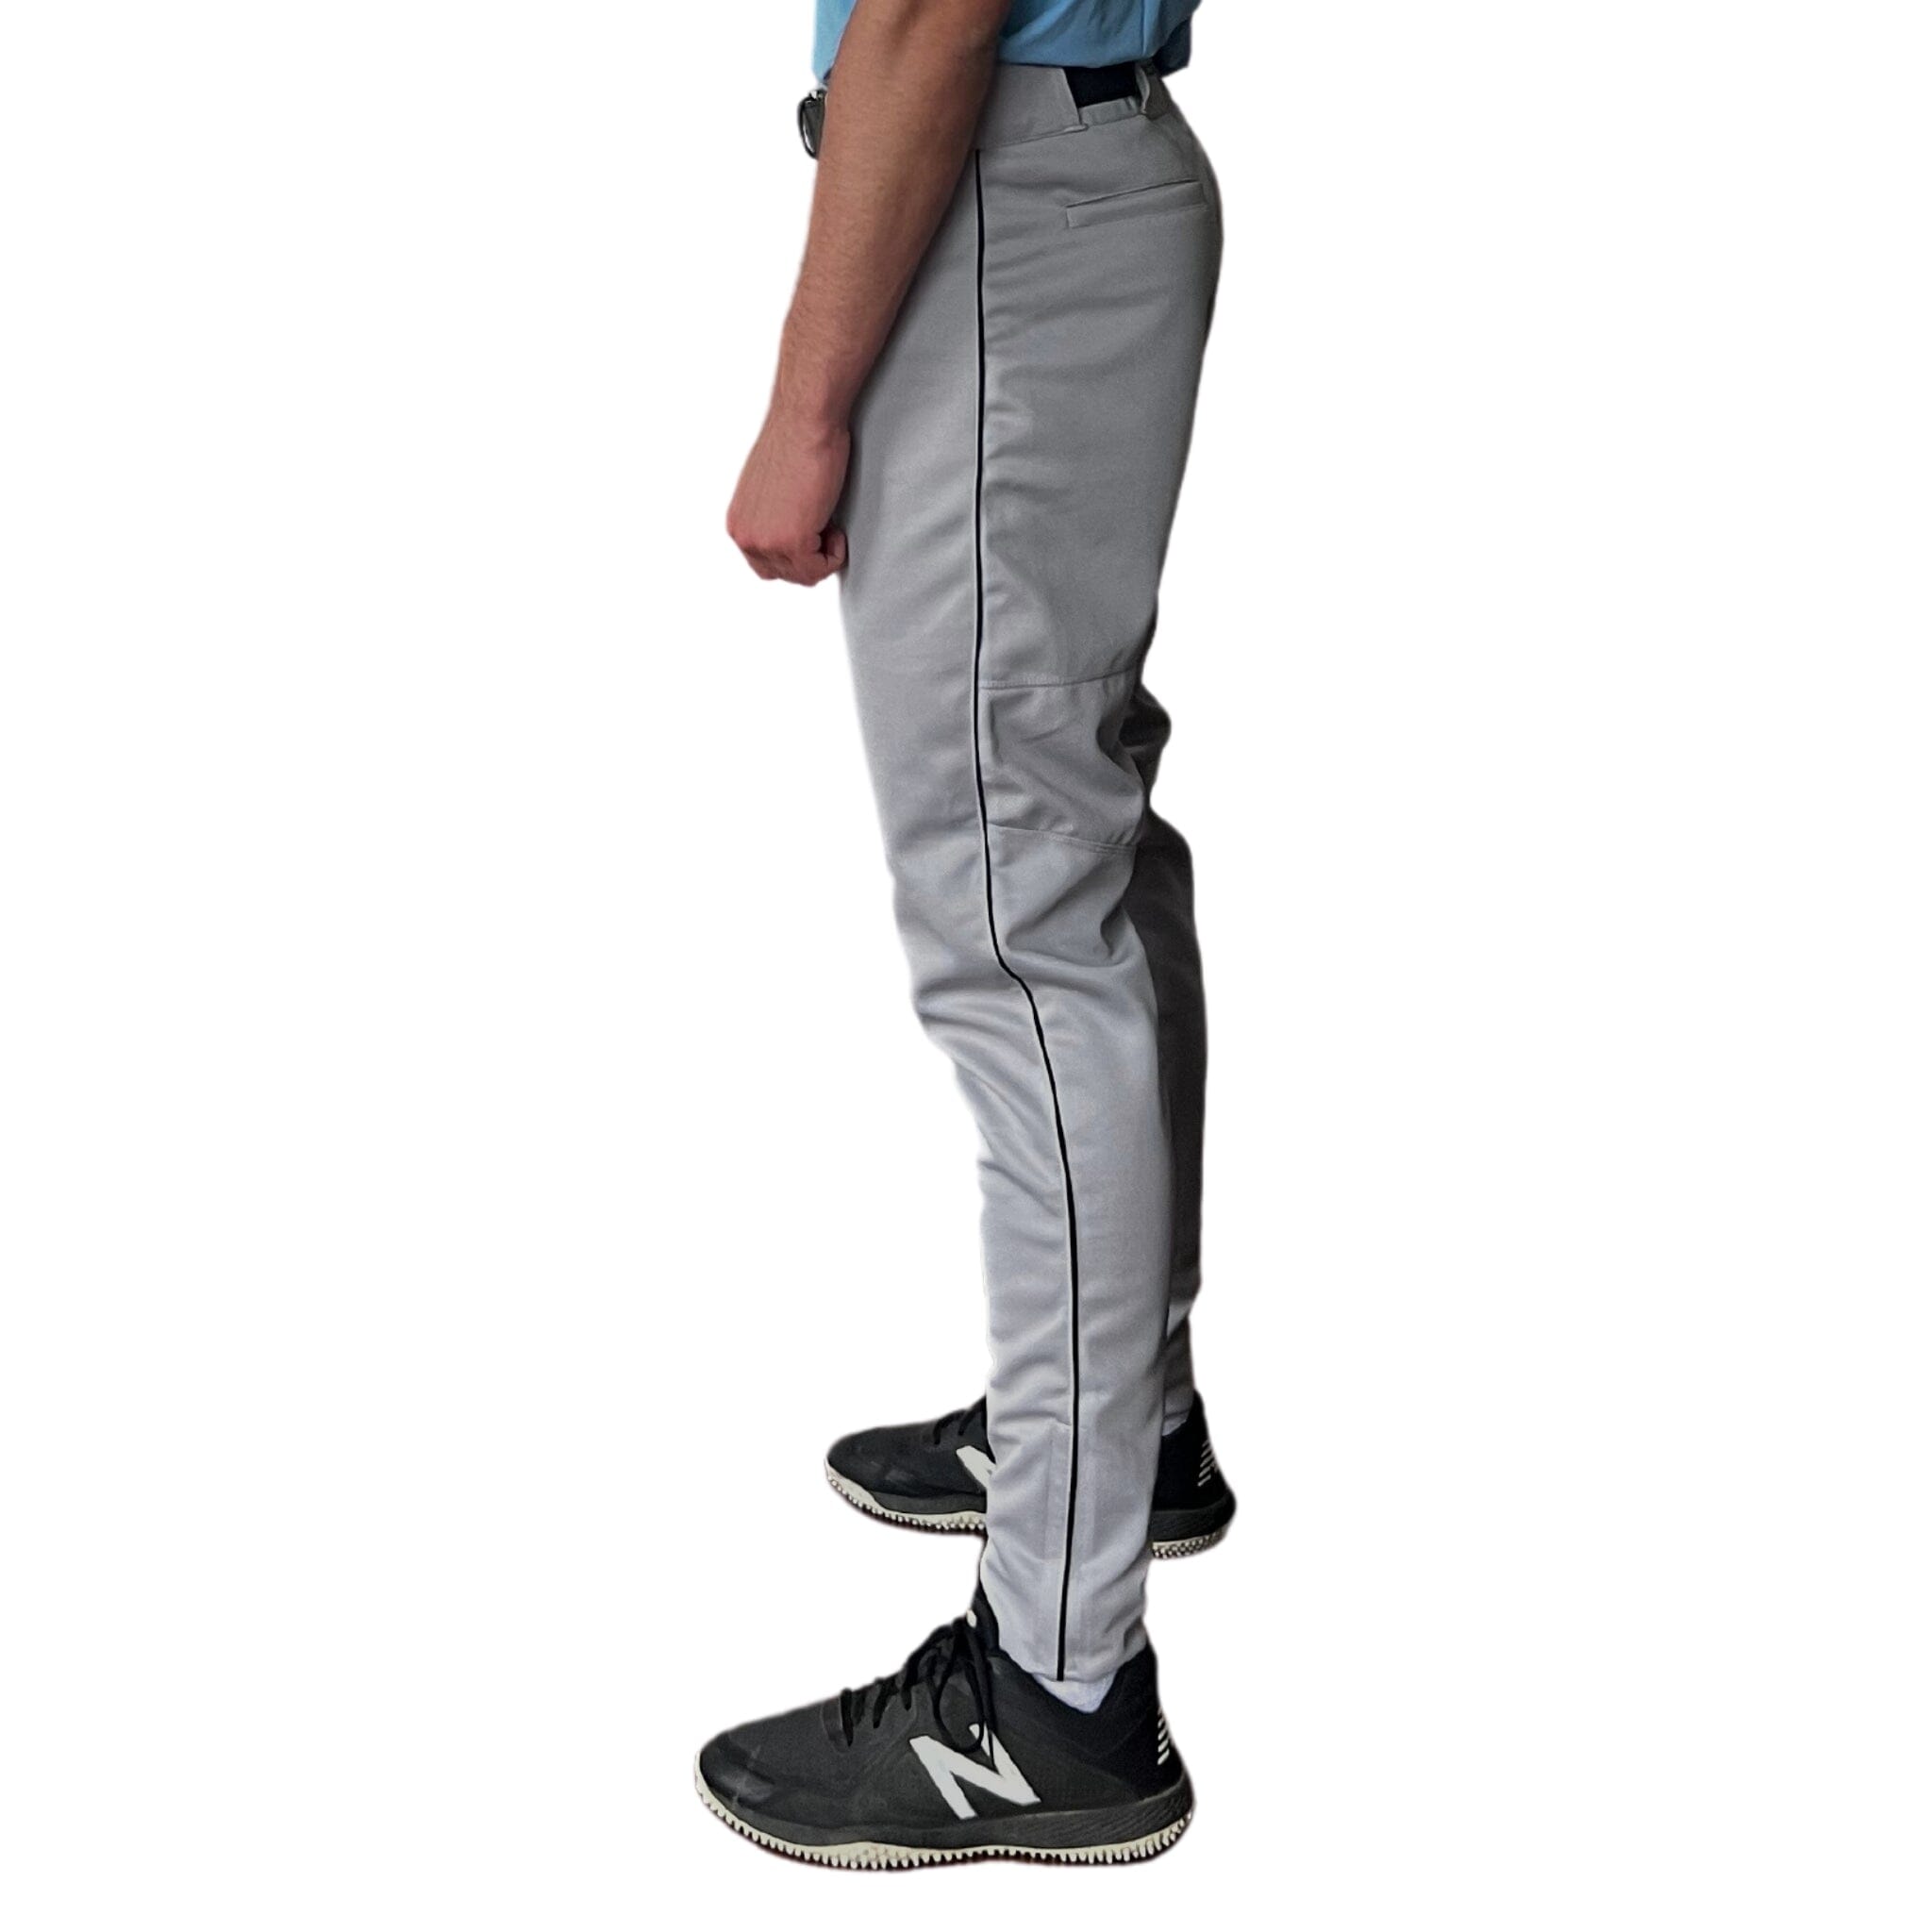 BRUCE BOLT Premium Pro Baseball Pant - GREY w/ Black Piping